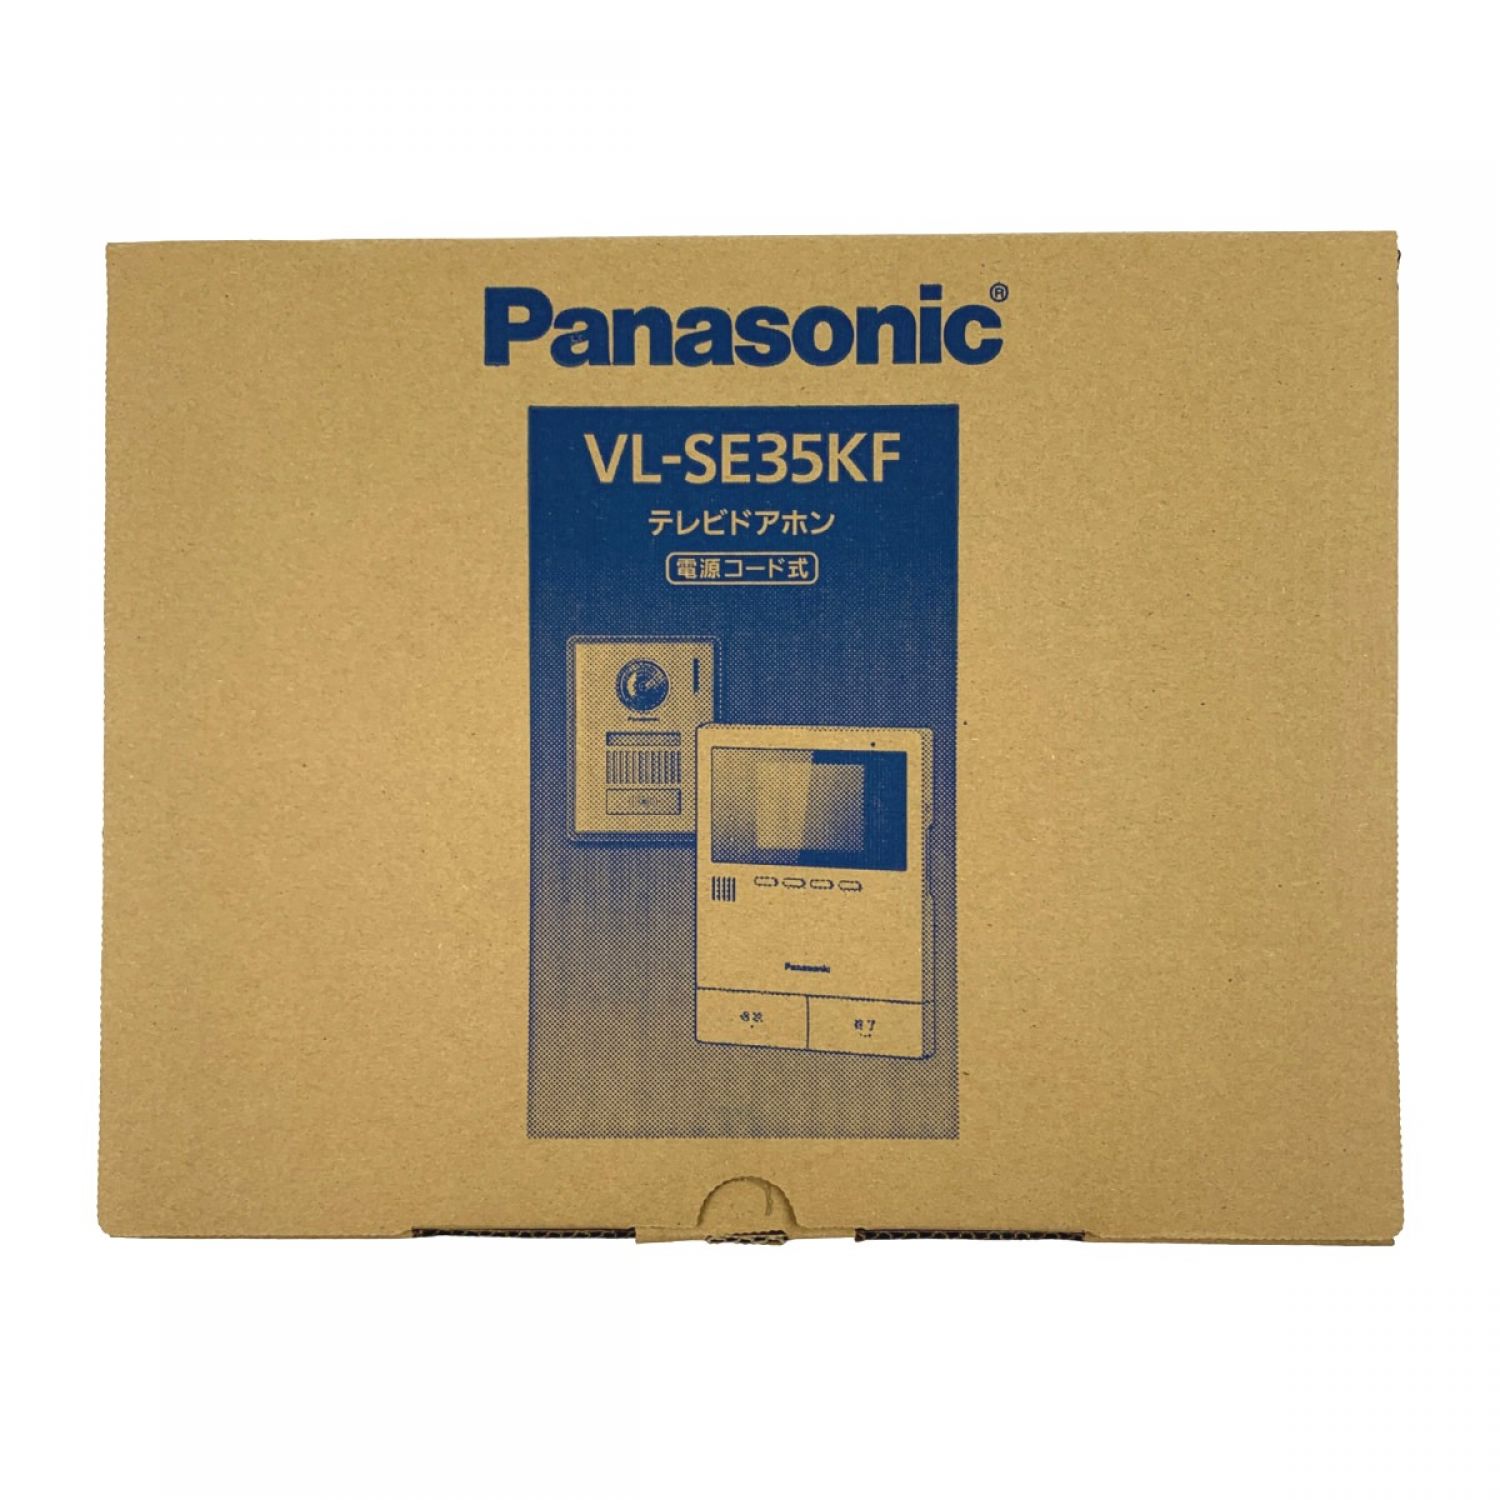 Panasonicドアホン VL-SZ35KF 新品未使用 - 防犯カメラ